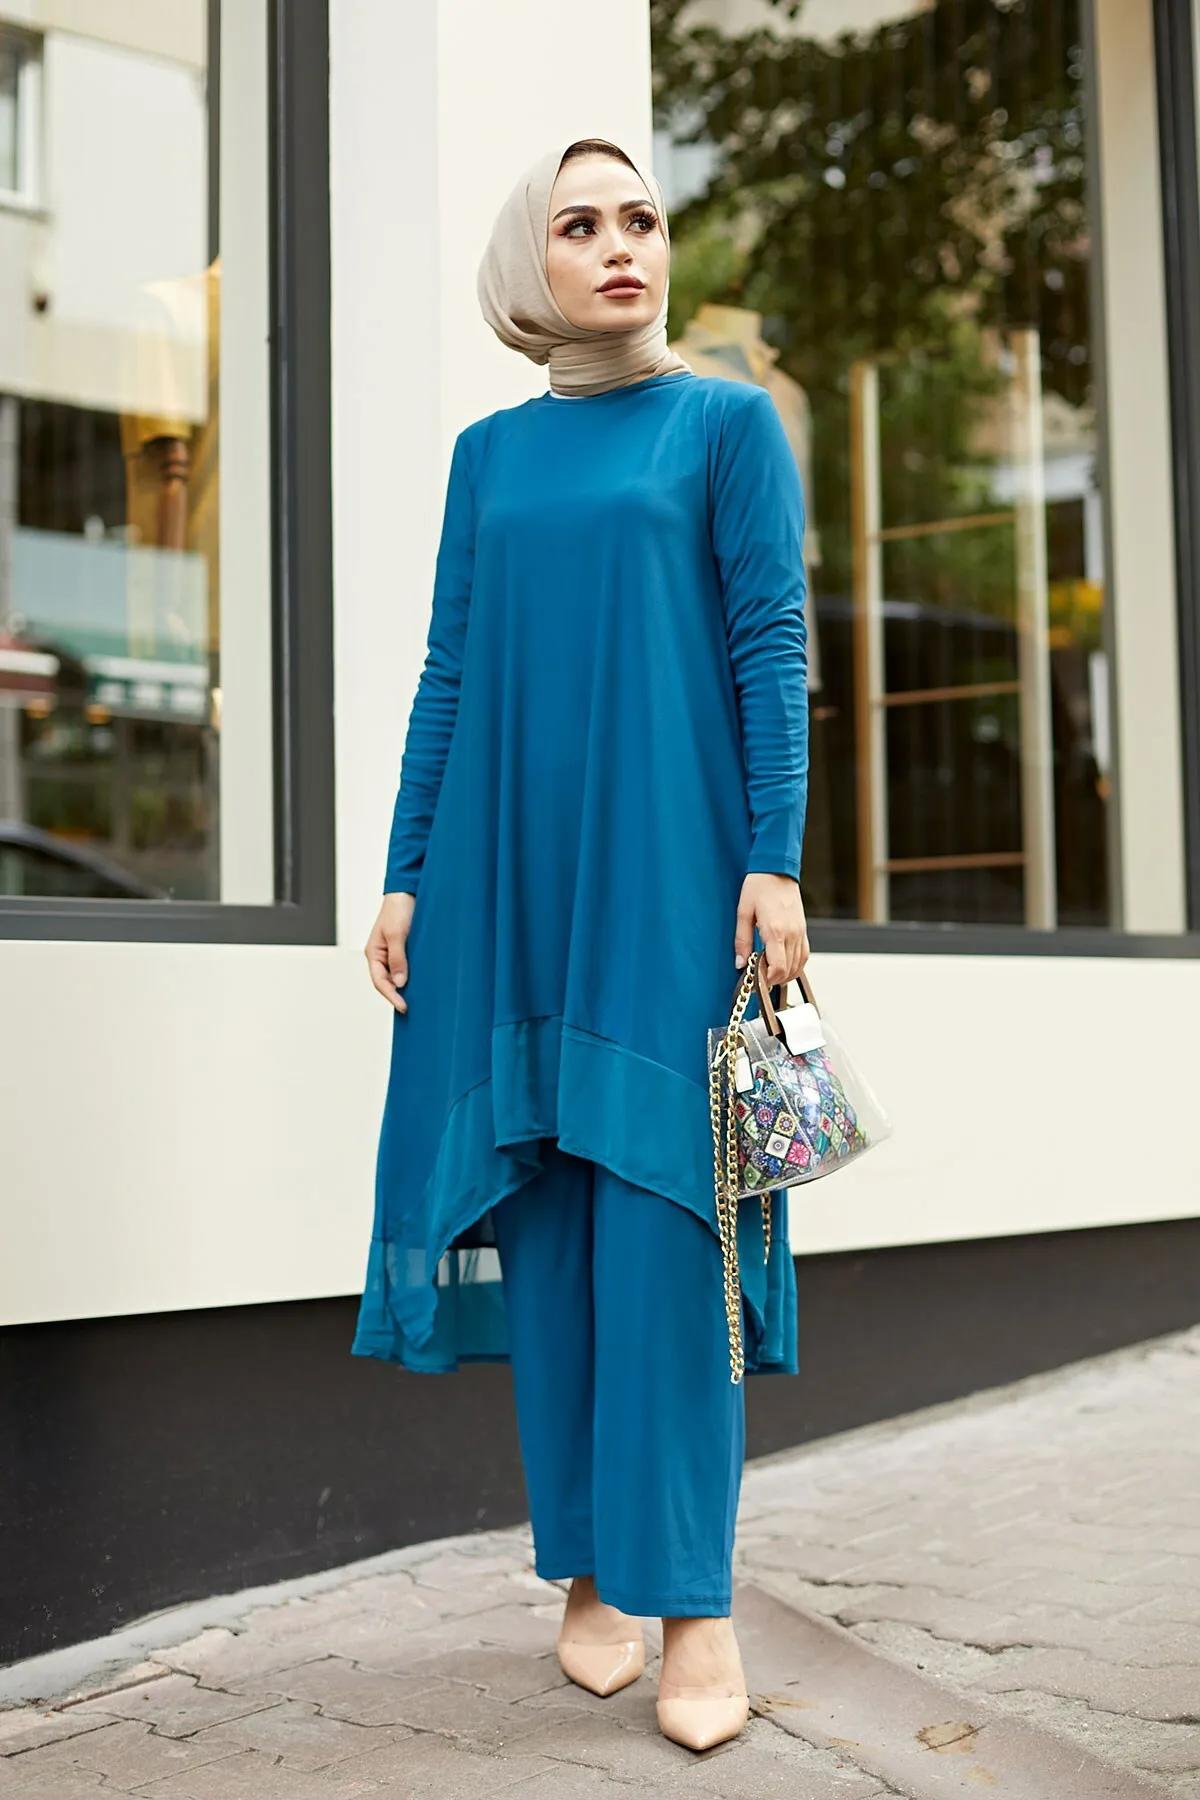 Skirt Chiffon Dual Suit Indigo Muslim clothes for women abaya hijab 2021 knitted suit Muslim dresses 2021